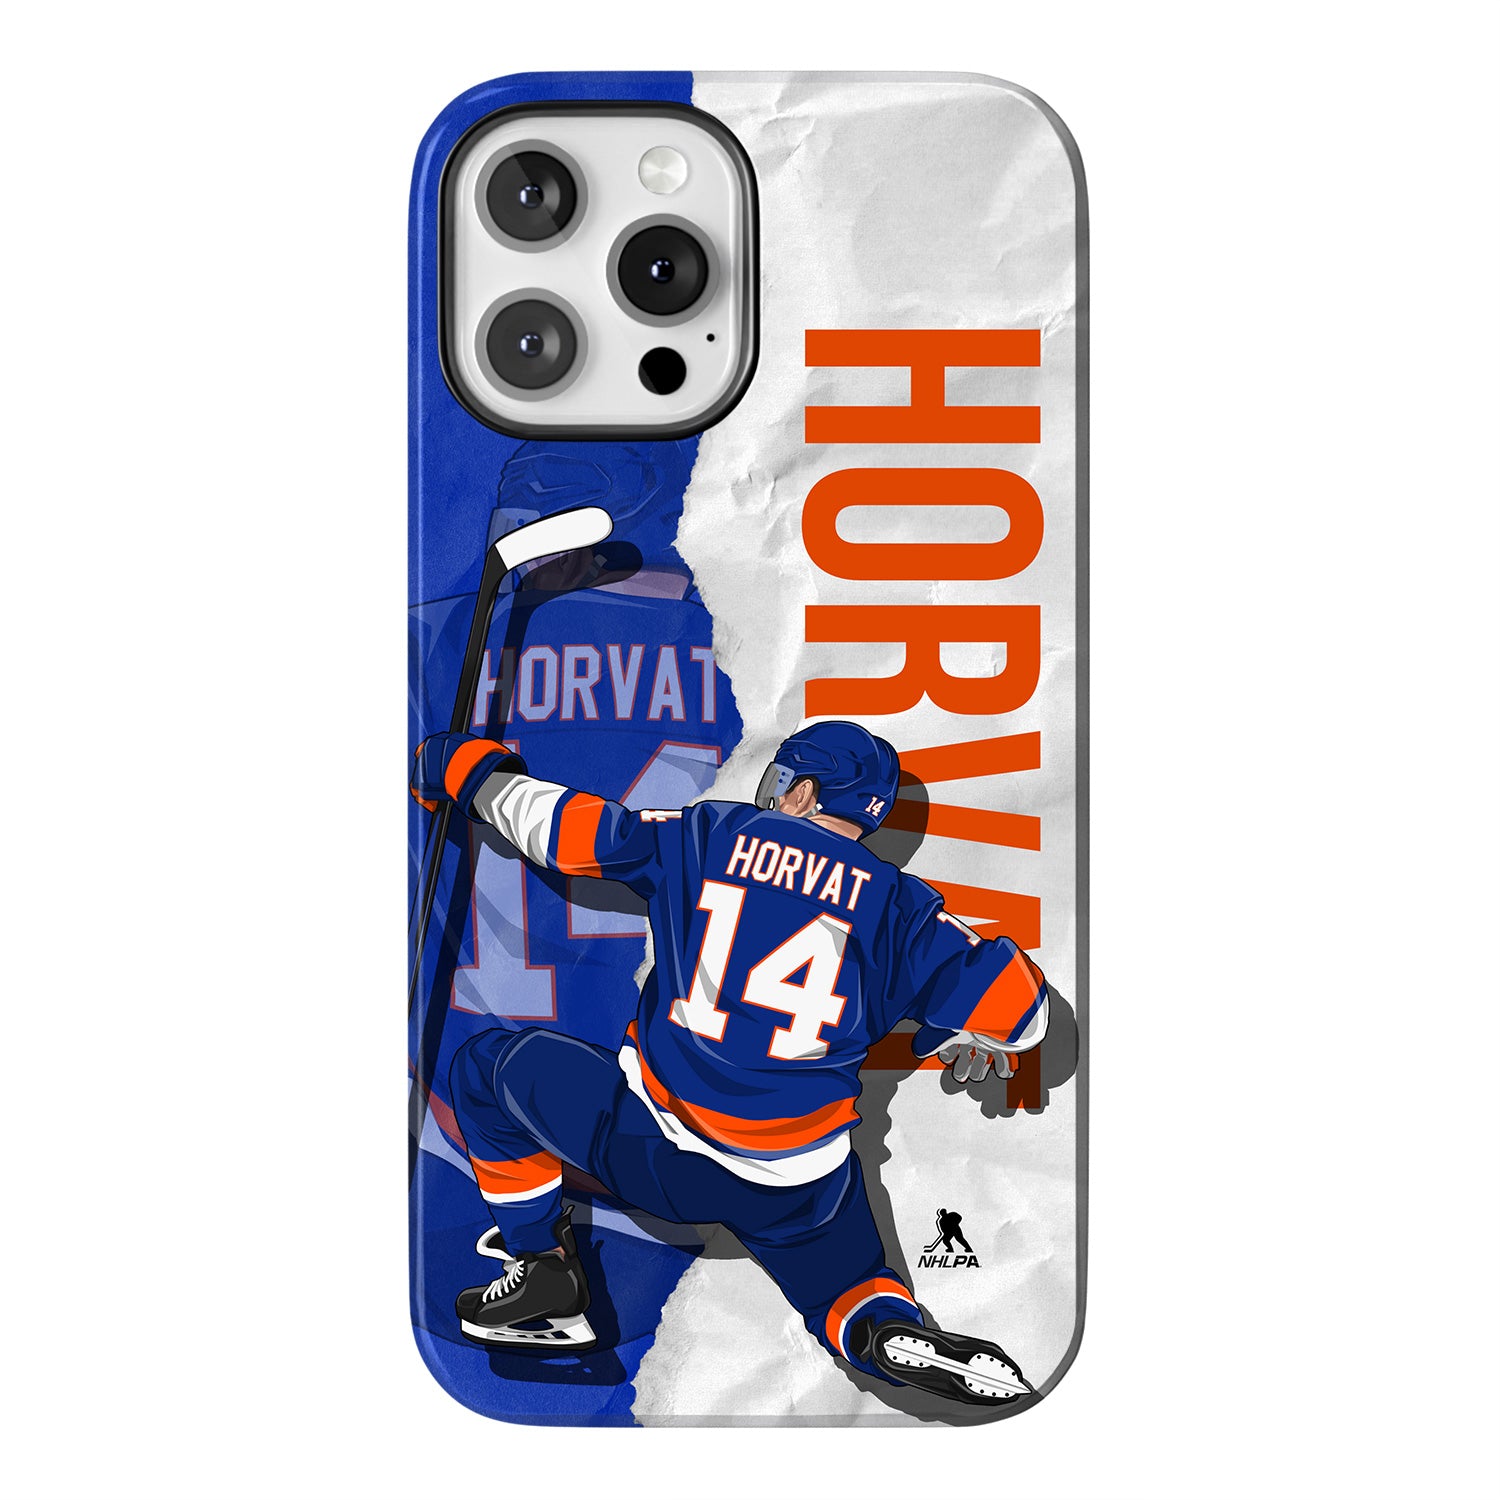 Horvat Star Series 3.0 Phone Case